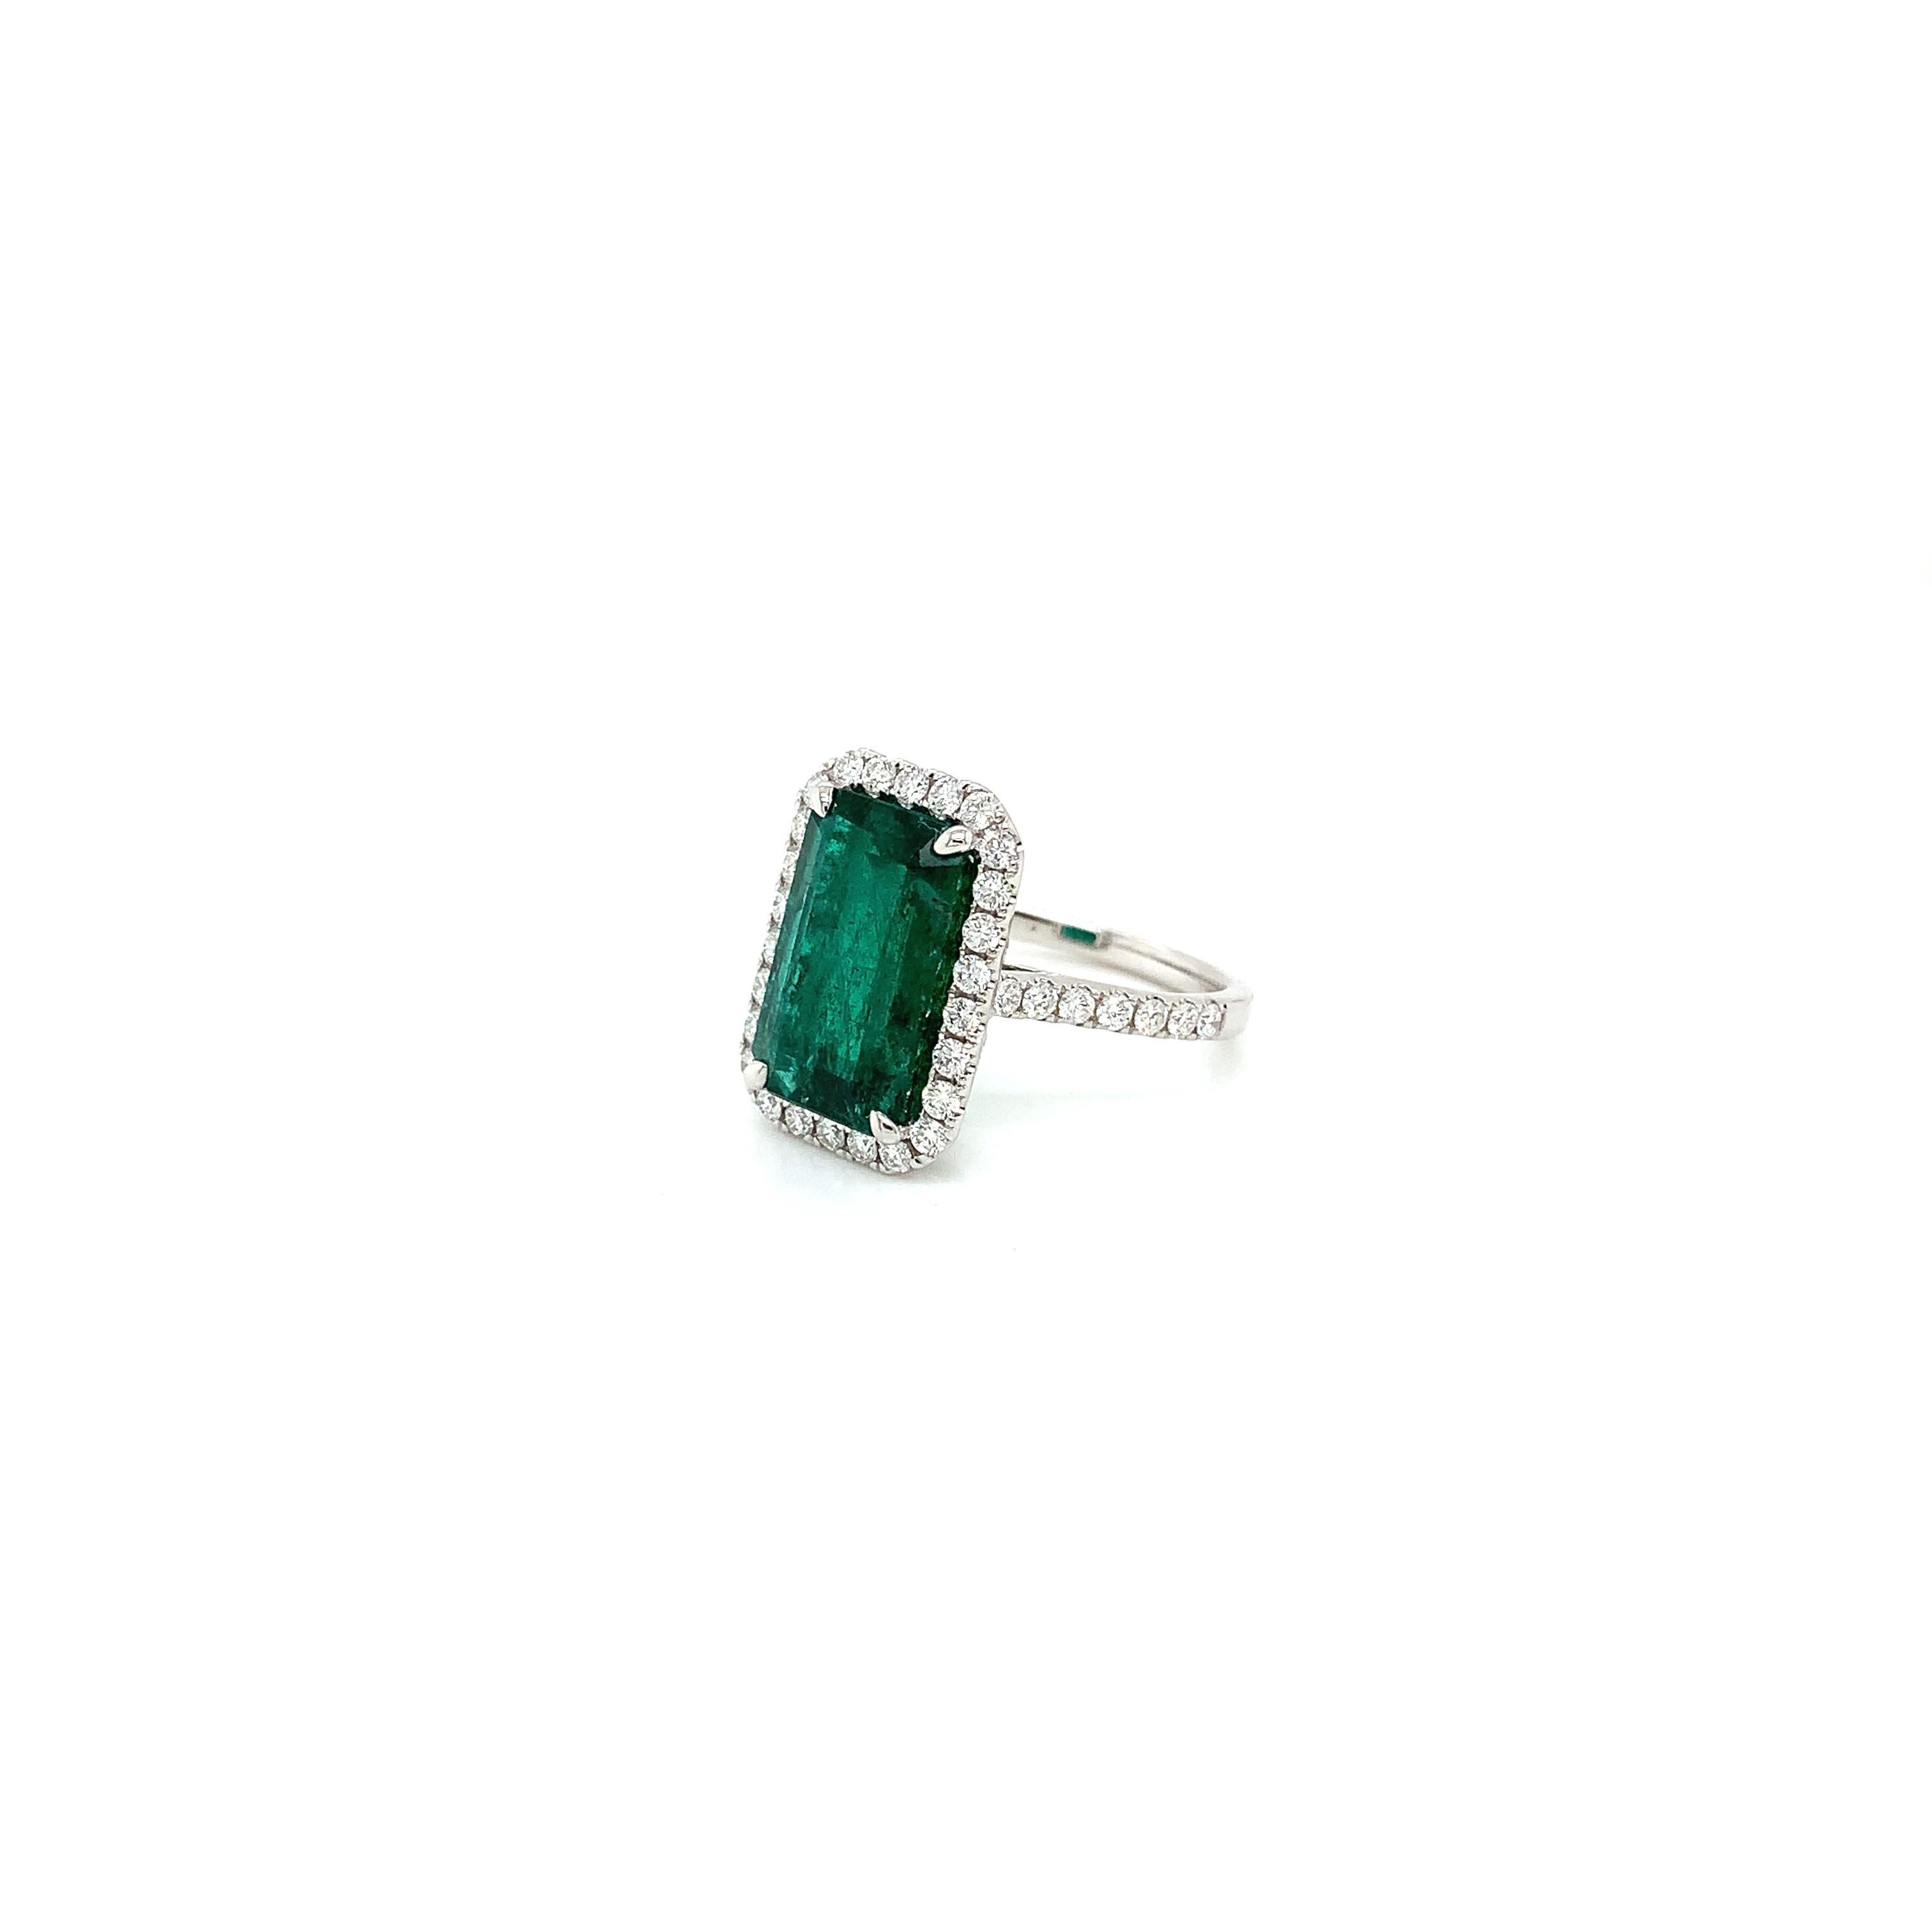 Modern Certified 18 Karat White Gold Emerald Cut Emerald & Diamond Ring 5.08 Carats